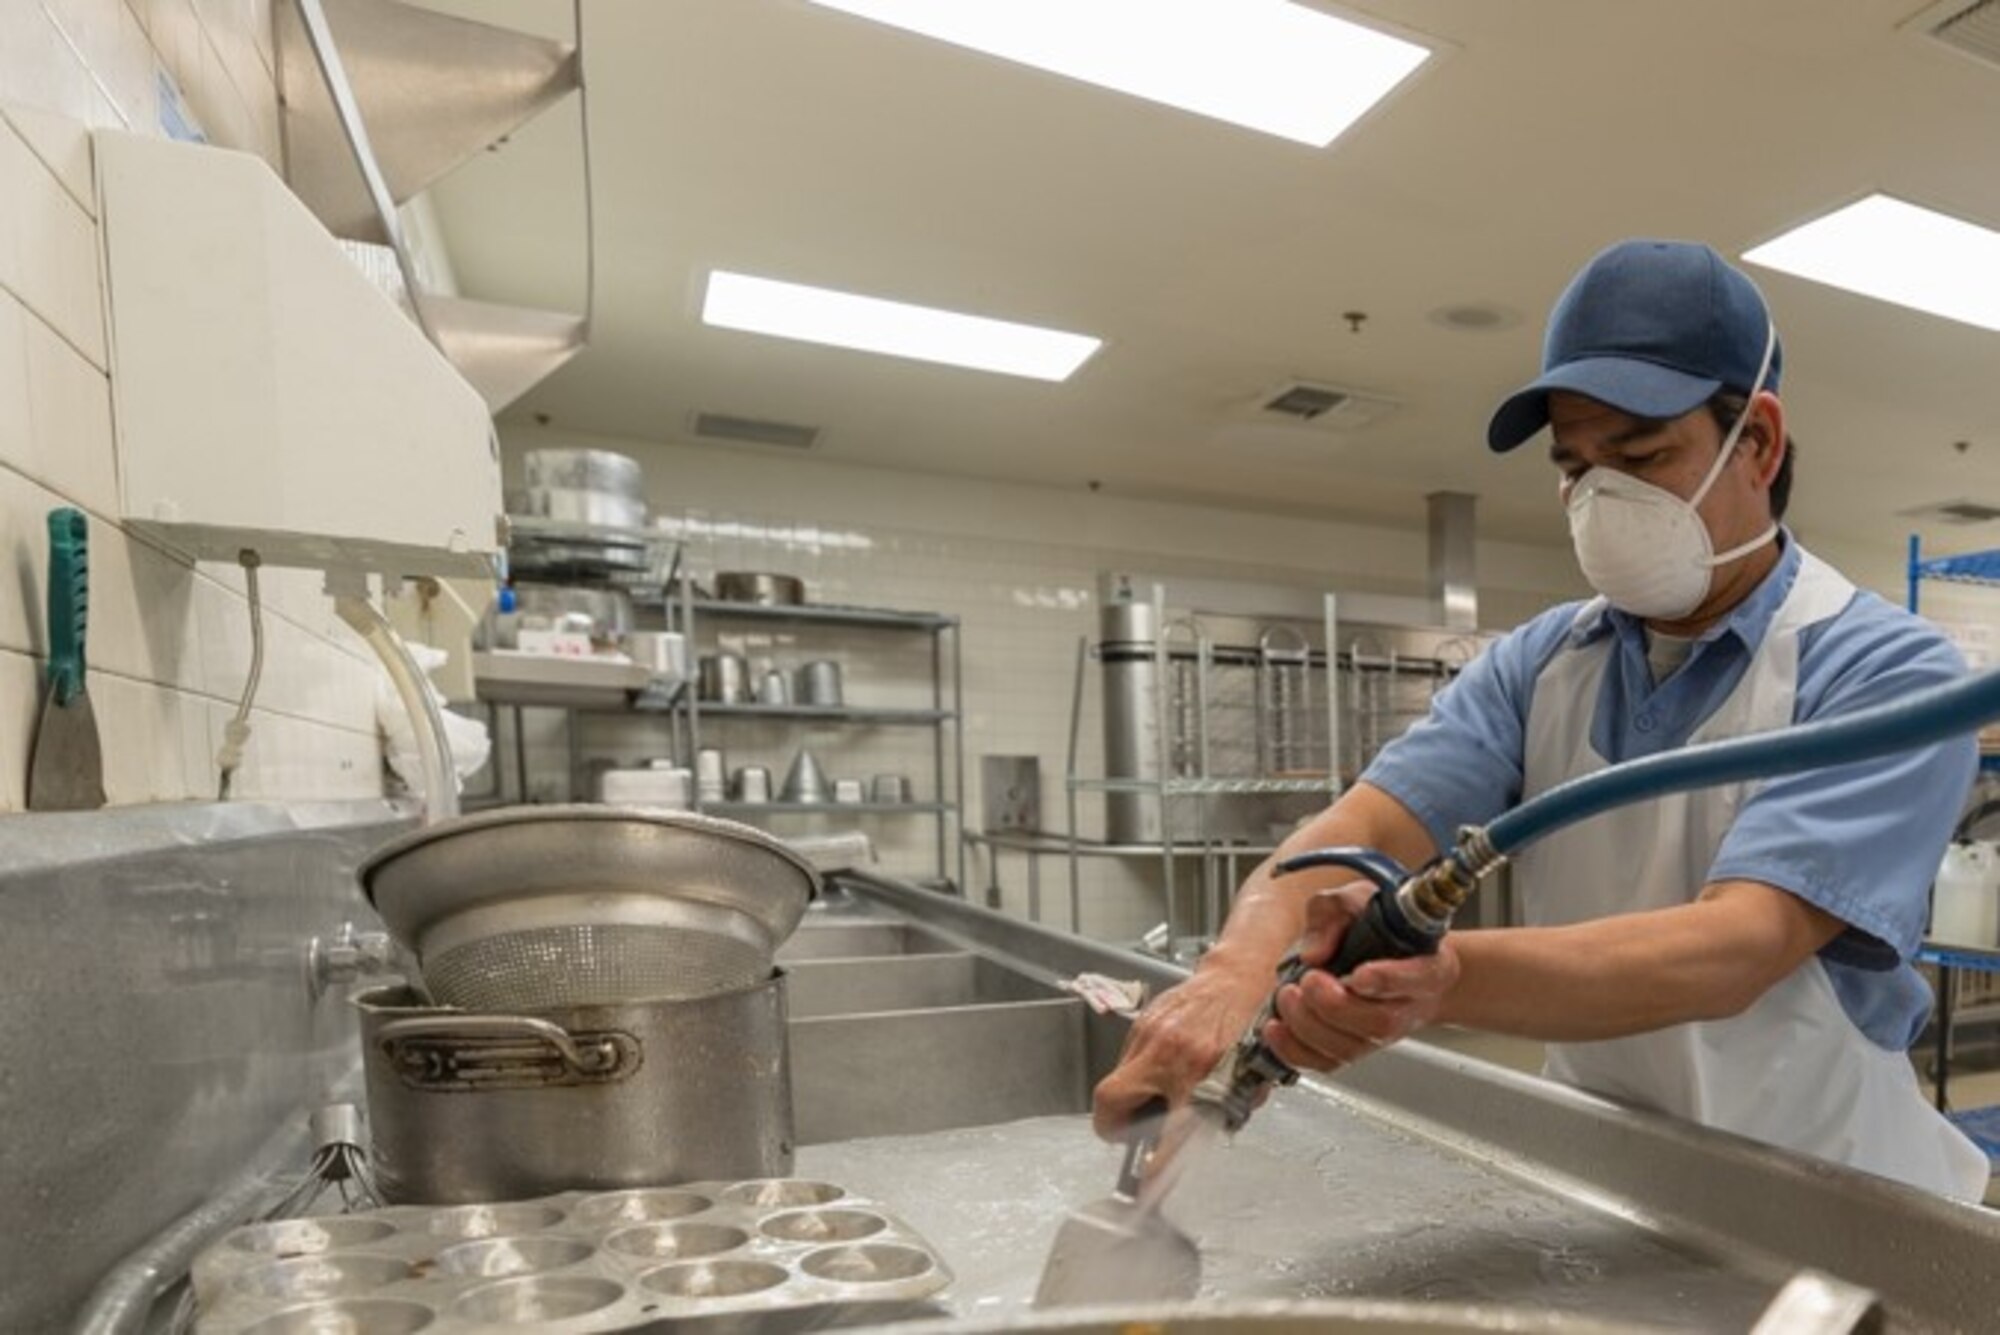 Melvin Pardilla, a prep cook at the base dining facility at Edwards Air Force Base, California, washed dishes between meals, April 7.